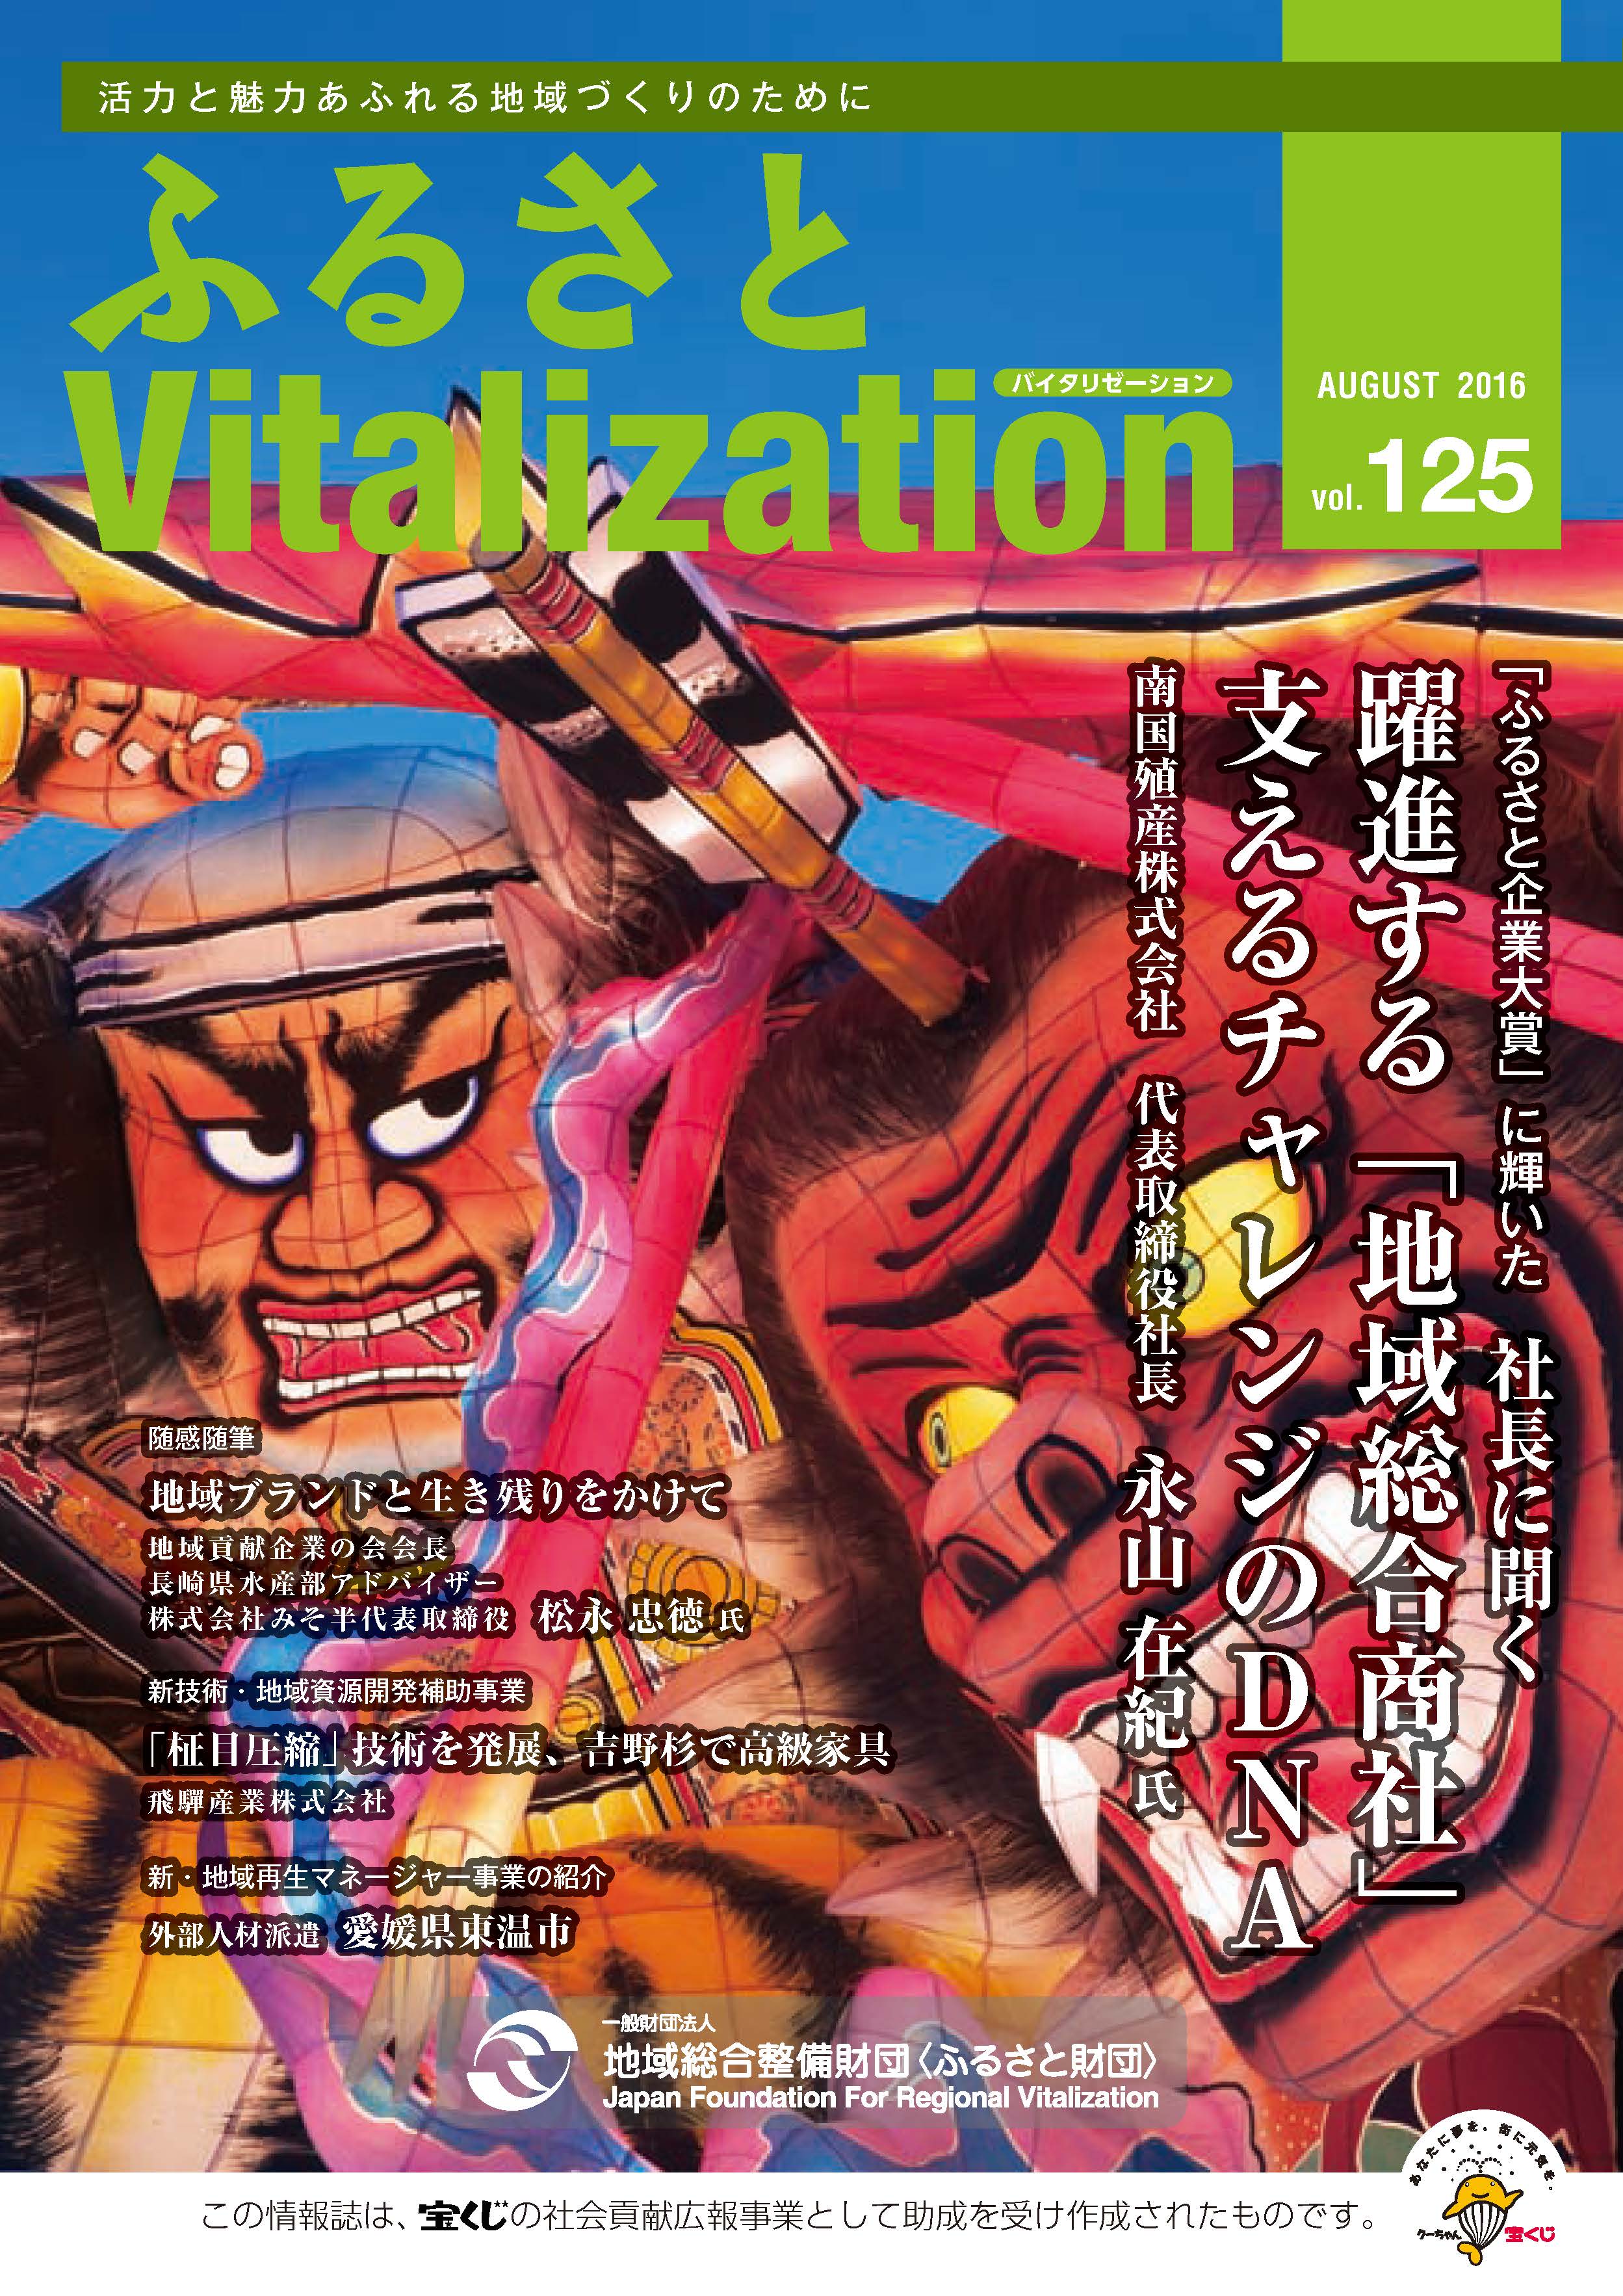 urusato Vitalization vol.125-1.jpg